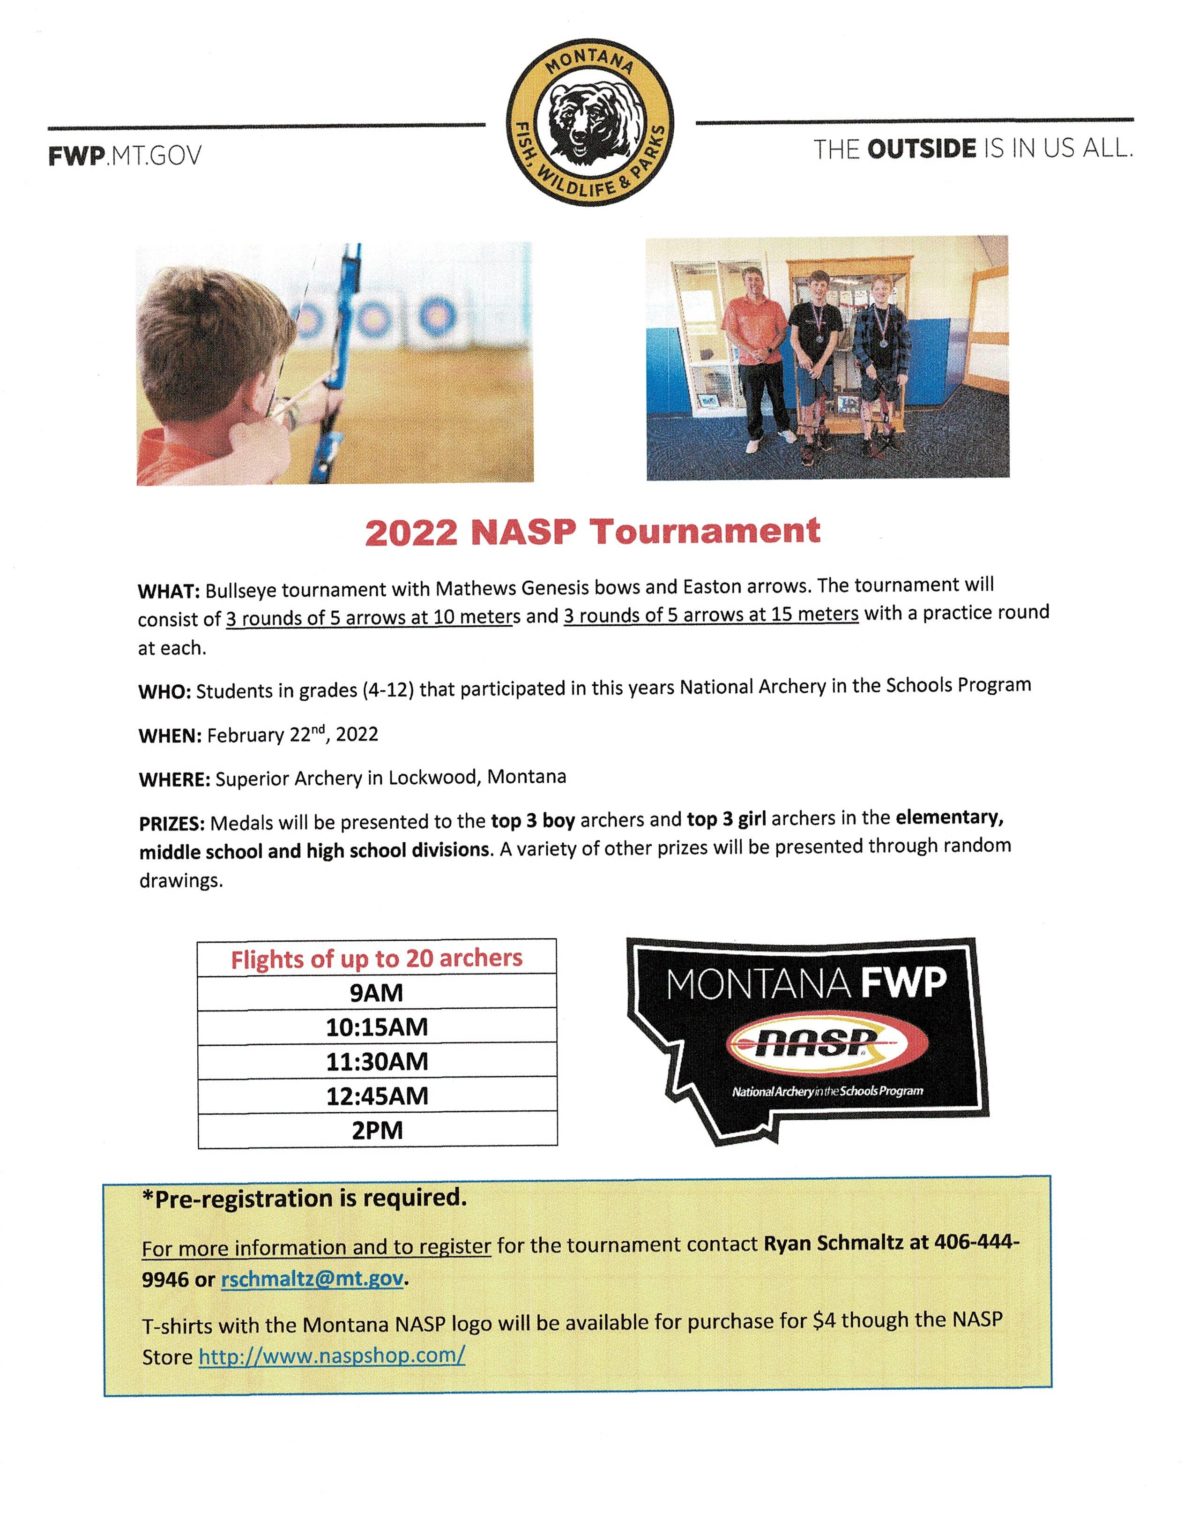 2022 NASP Tournament Indoor Range Closed to Open Shooting 2/22/2022